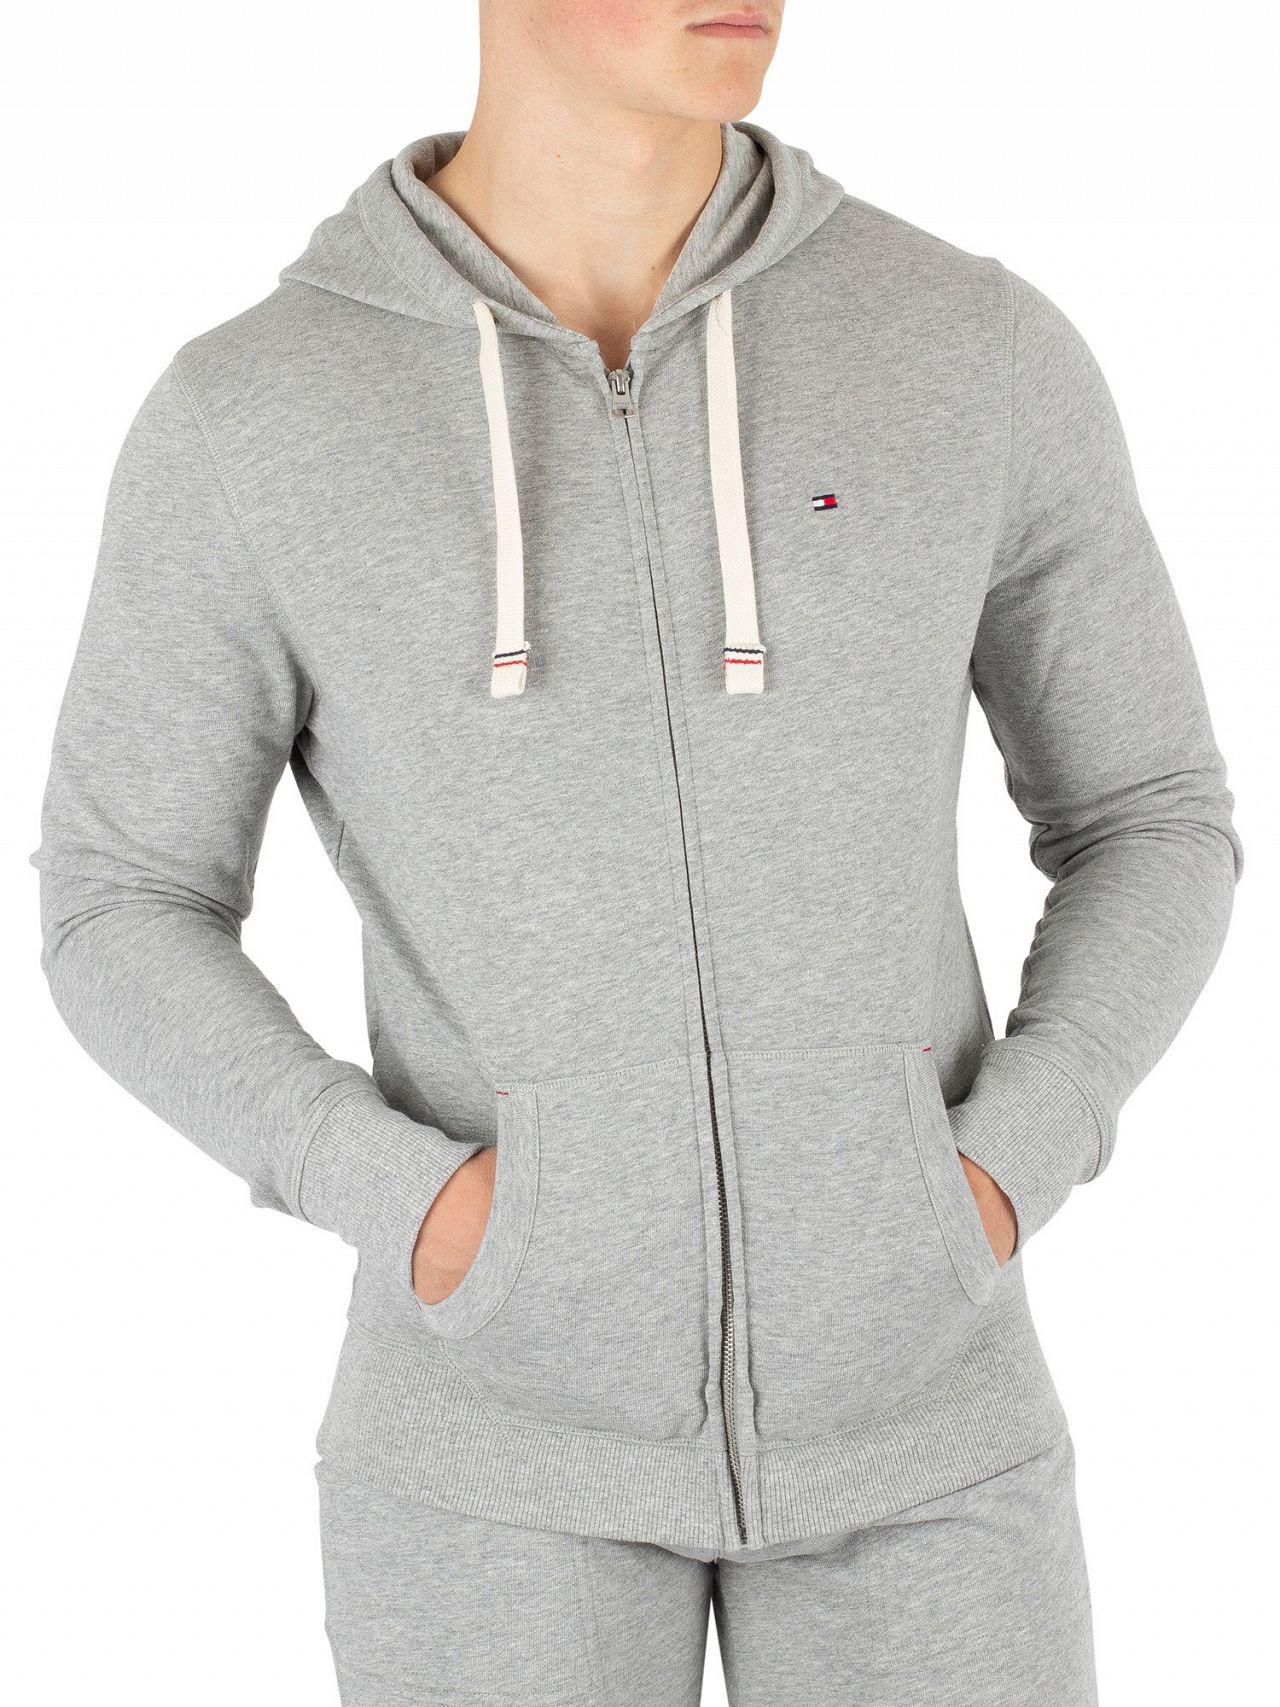 Tommy Hilfiger Cotton Grey Heather Logo Zip Hoodie in Gray for Men - Lyst